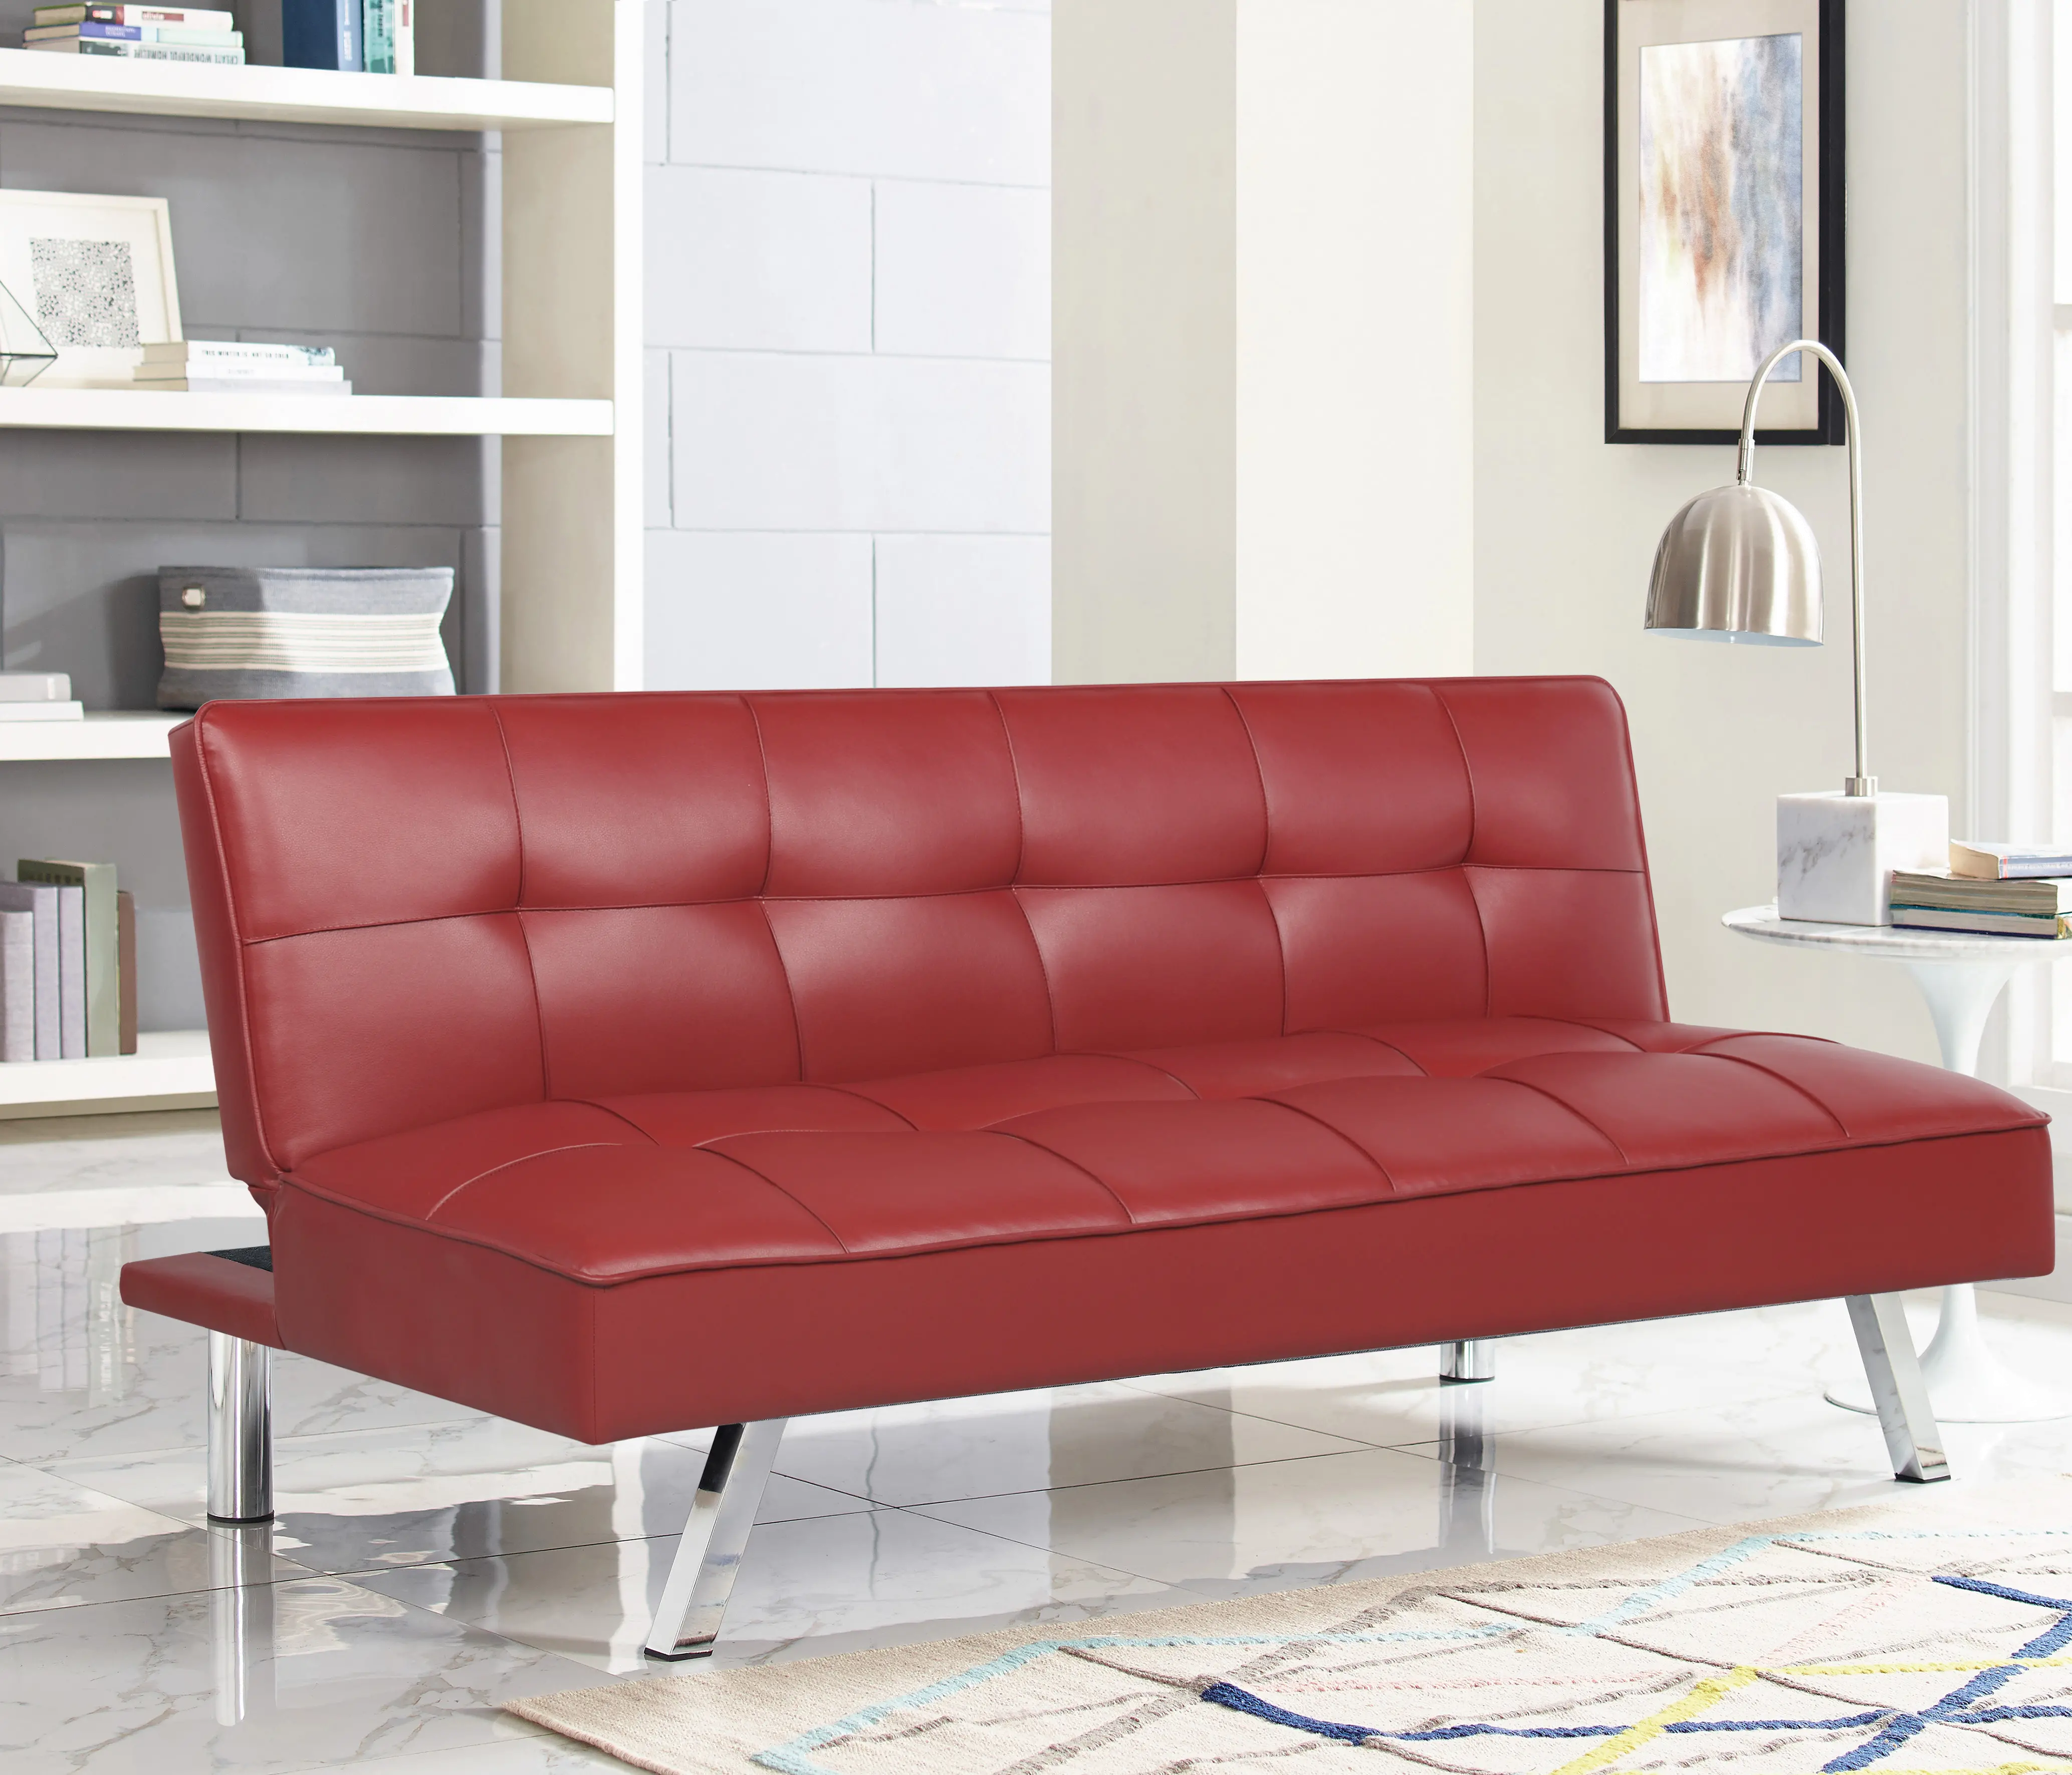 Mia Red Multi-Functional Sofa Lounger Sleeper by Serta Dream...